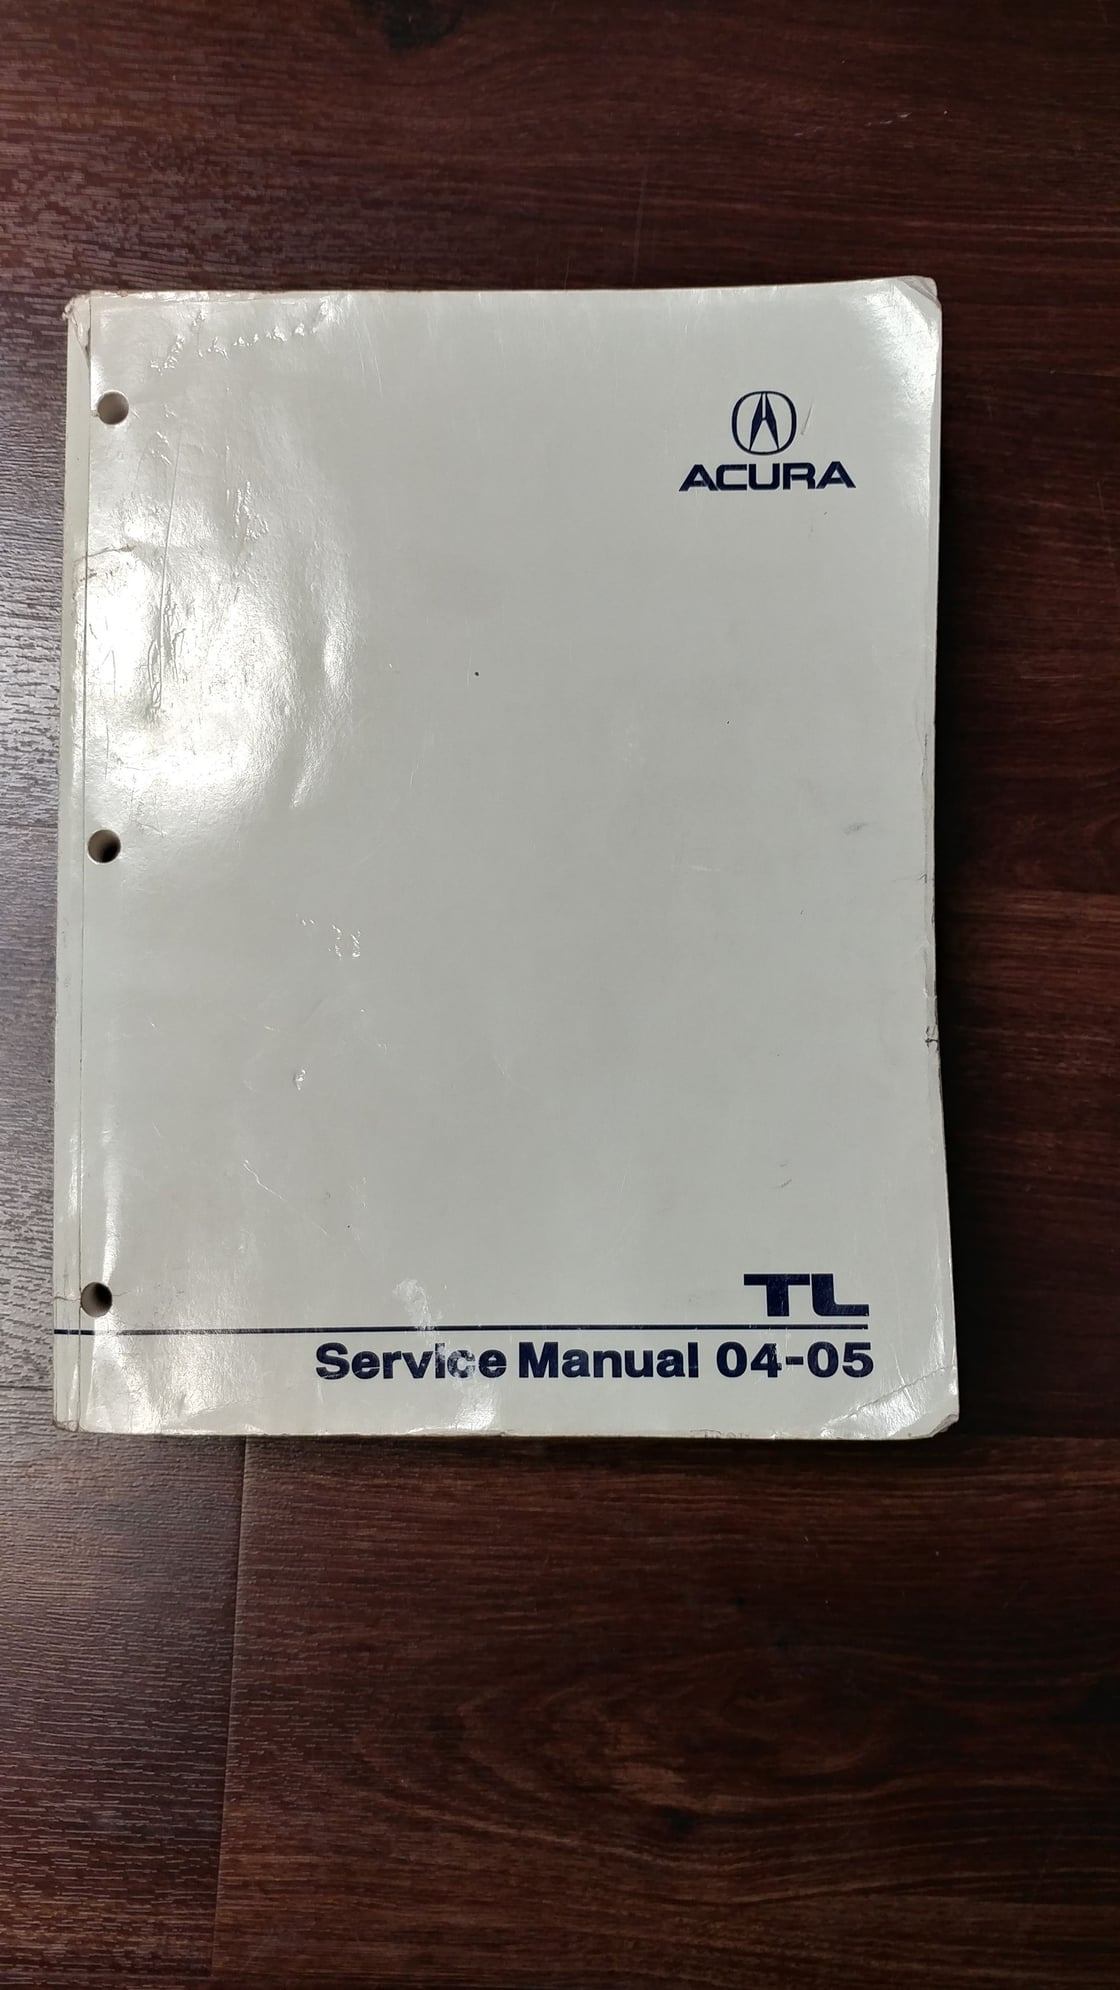 2008 Acura TL - 2004-2006 Acura TL Service Manual - Miscellaneous - $60 - Houston, TX 77053, United States